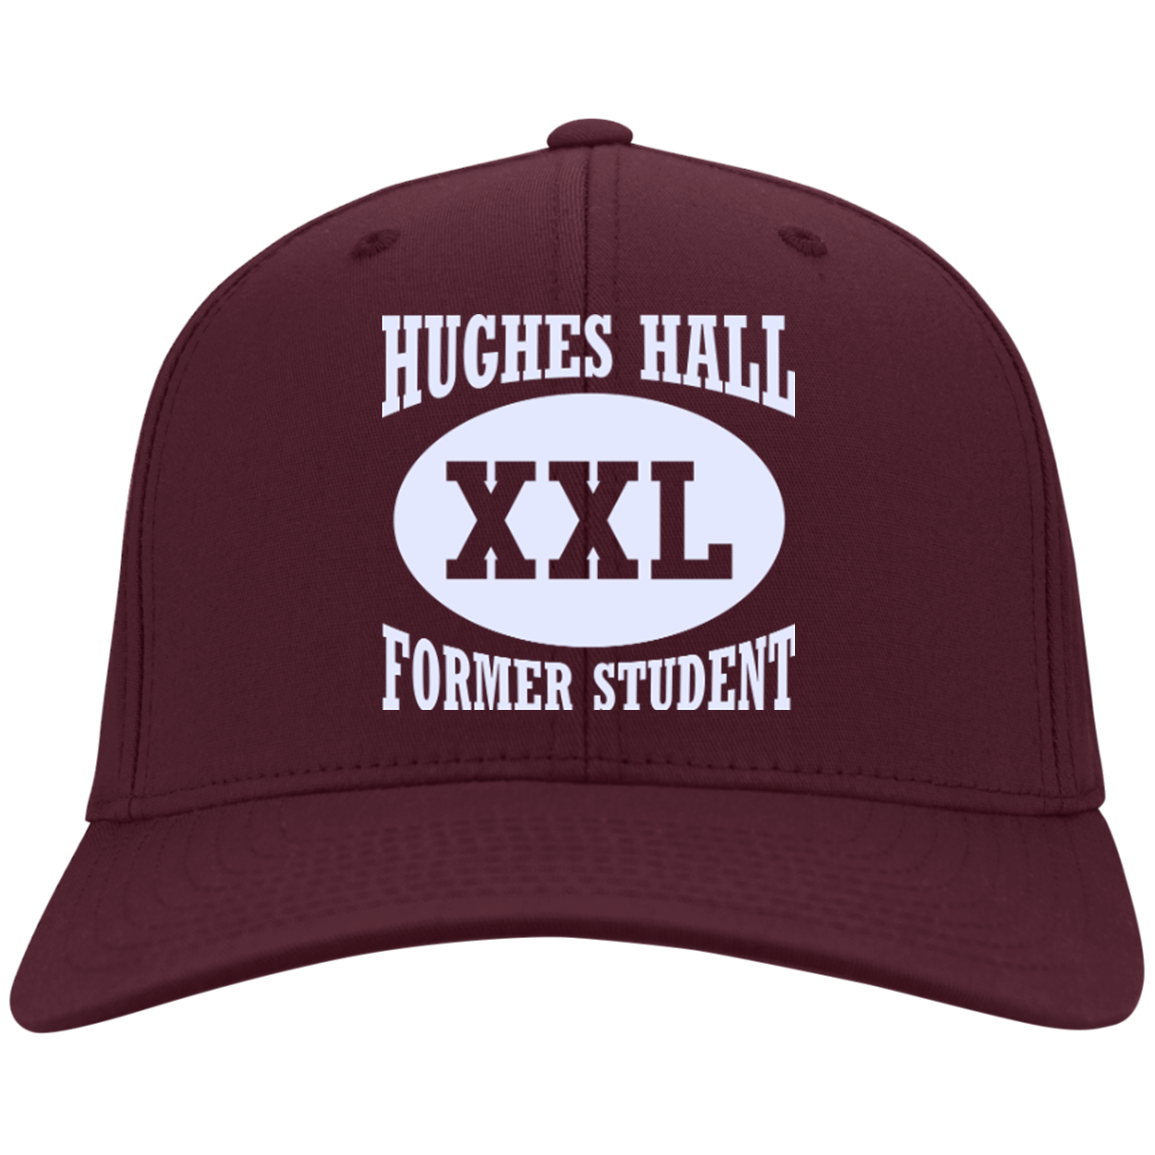 Hughes Hall Gear